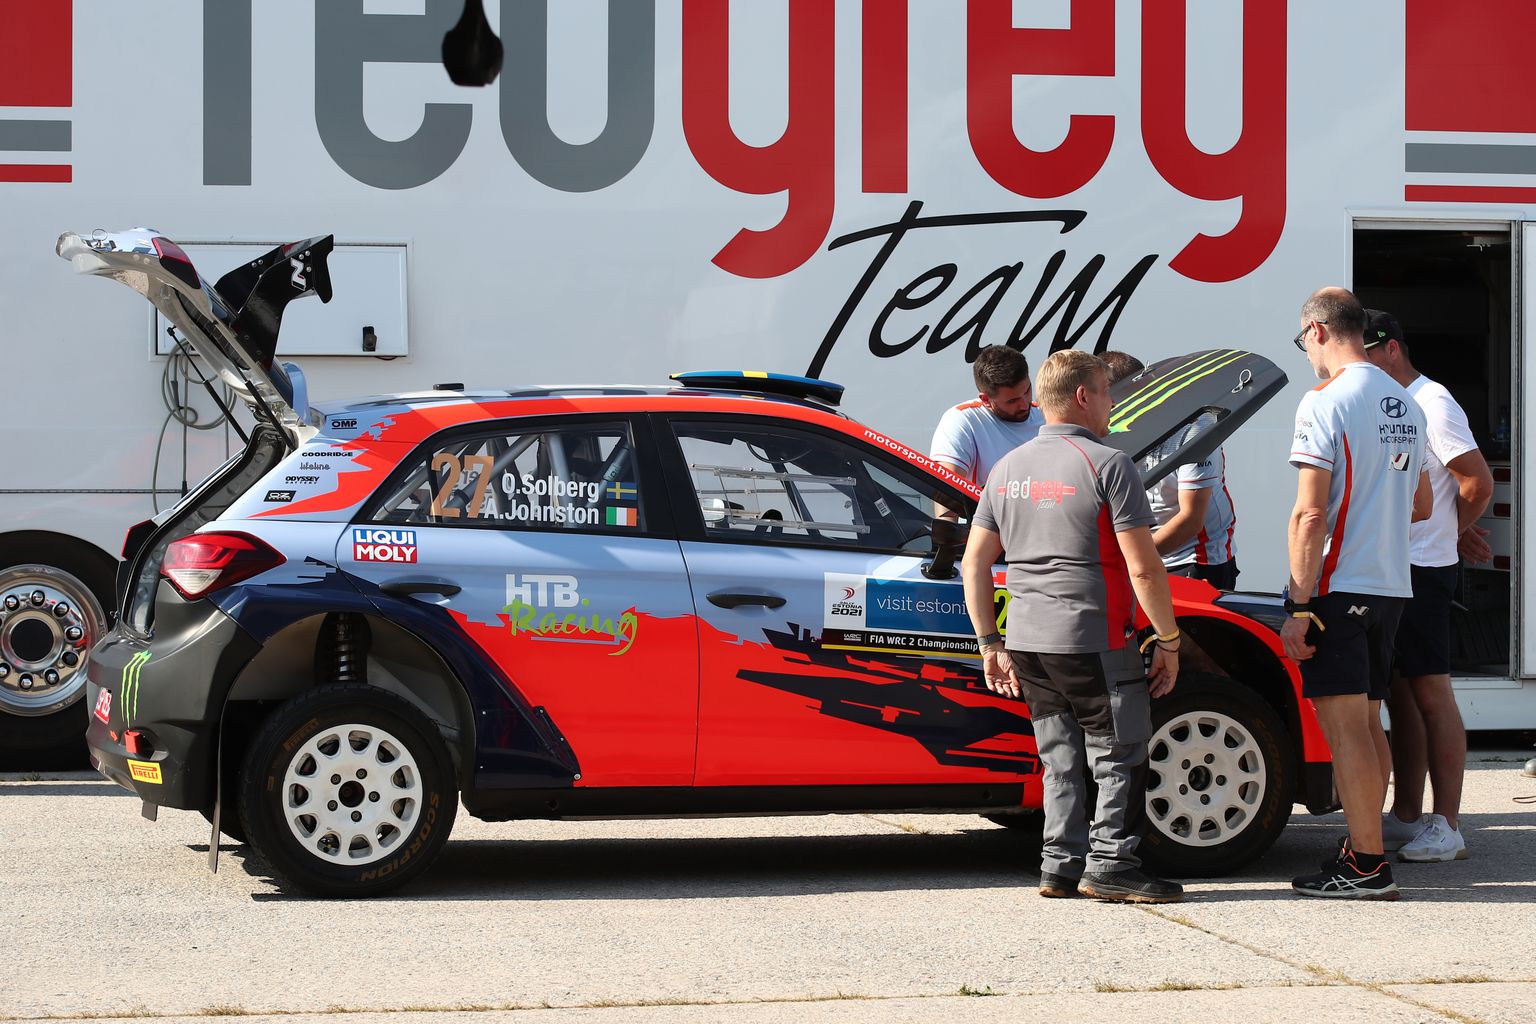 RedGrey meeskond 2021. aastal Rally Estonial, fotol Oliver Solbergi R5-auto.